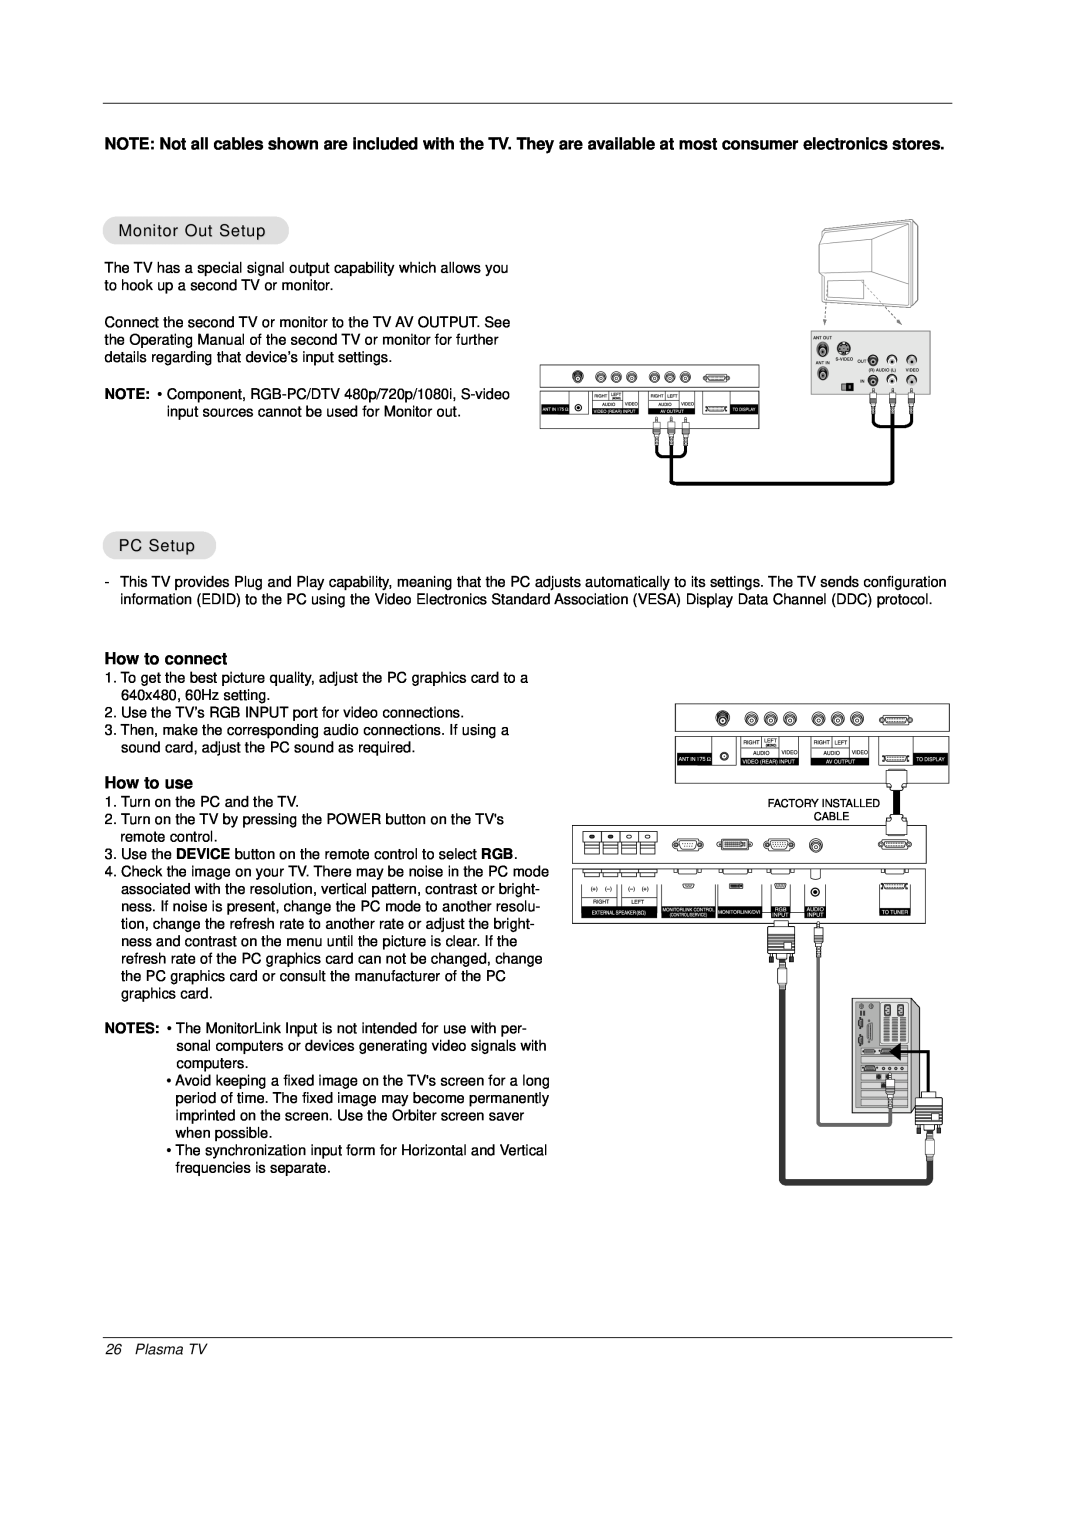 Mitsubishi Electronics PD-4225S manual Monitor Out Setup, PC Setup, How to connect, How to use, Plasma TV 